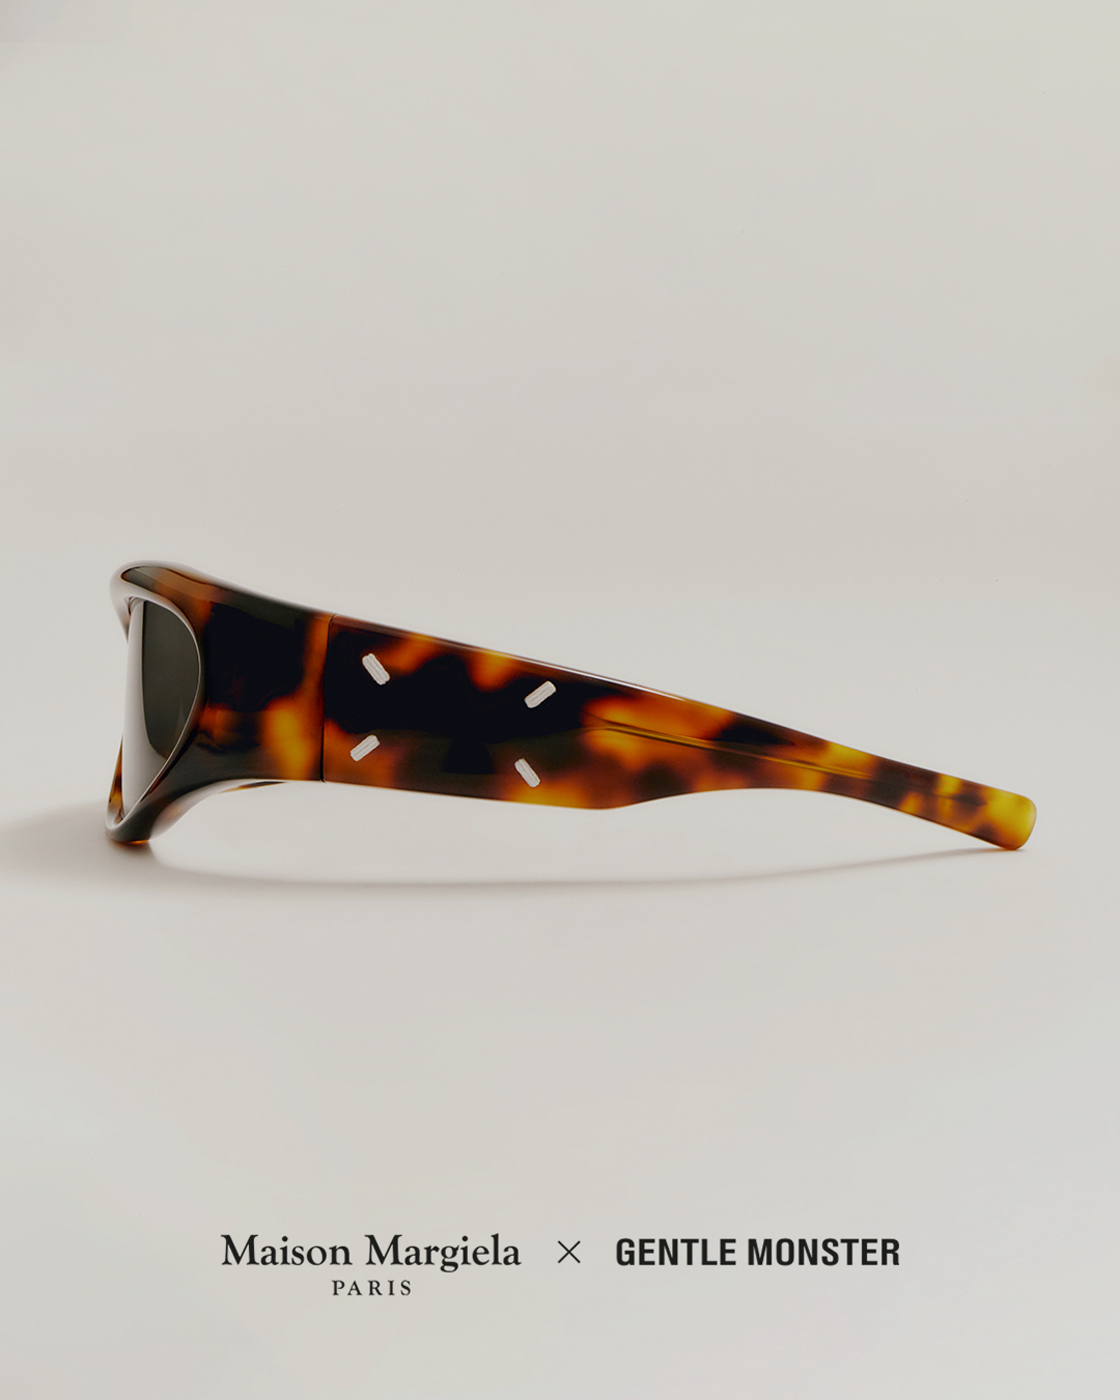 Buy KANNY DEVIS Animal Movie Inspired Sunglasses for Men at Amazon.in